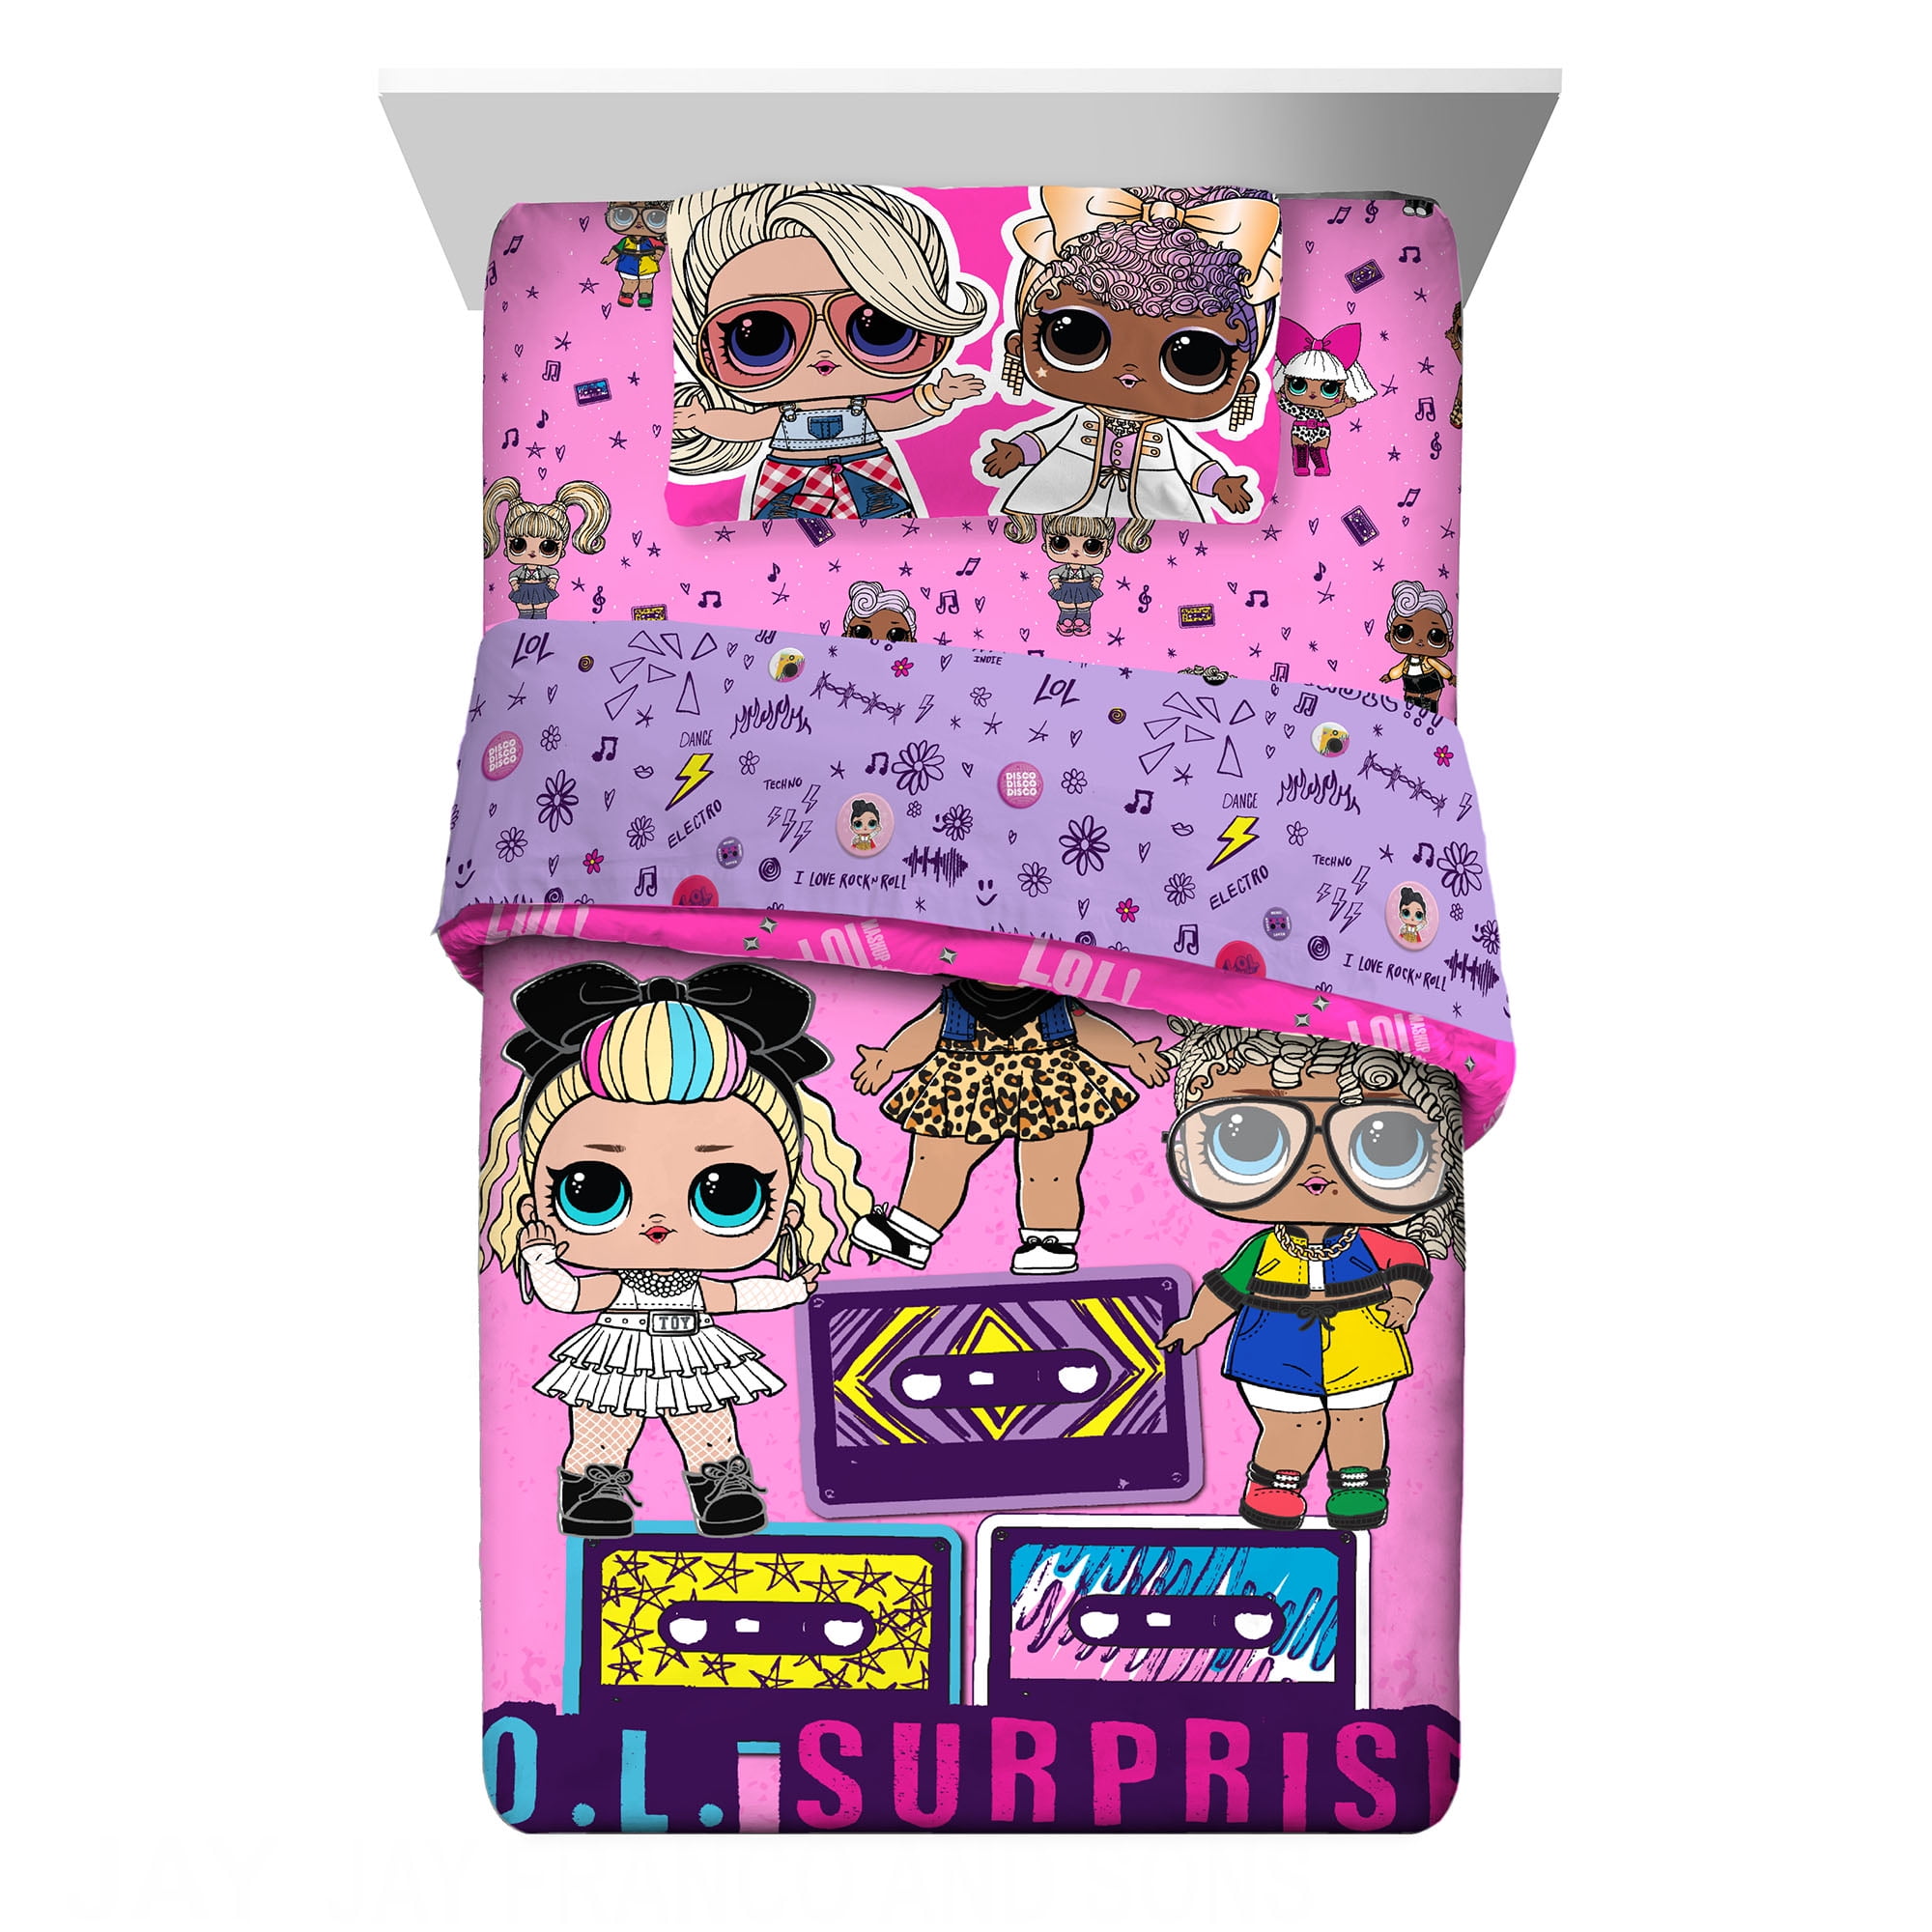 Girls Surprise Bedding Set LOL Kids Comforter Sheets Pillow Case Pink Twin Size 